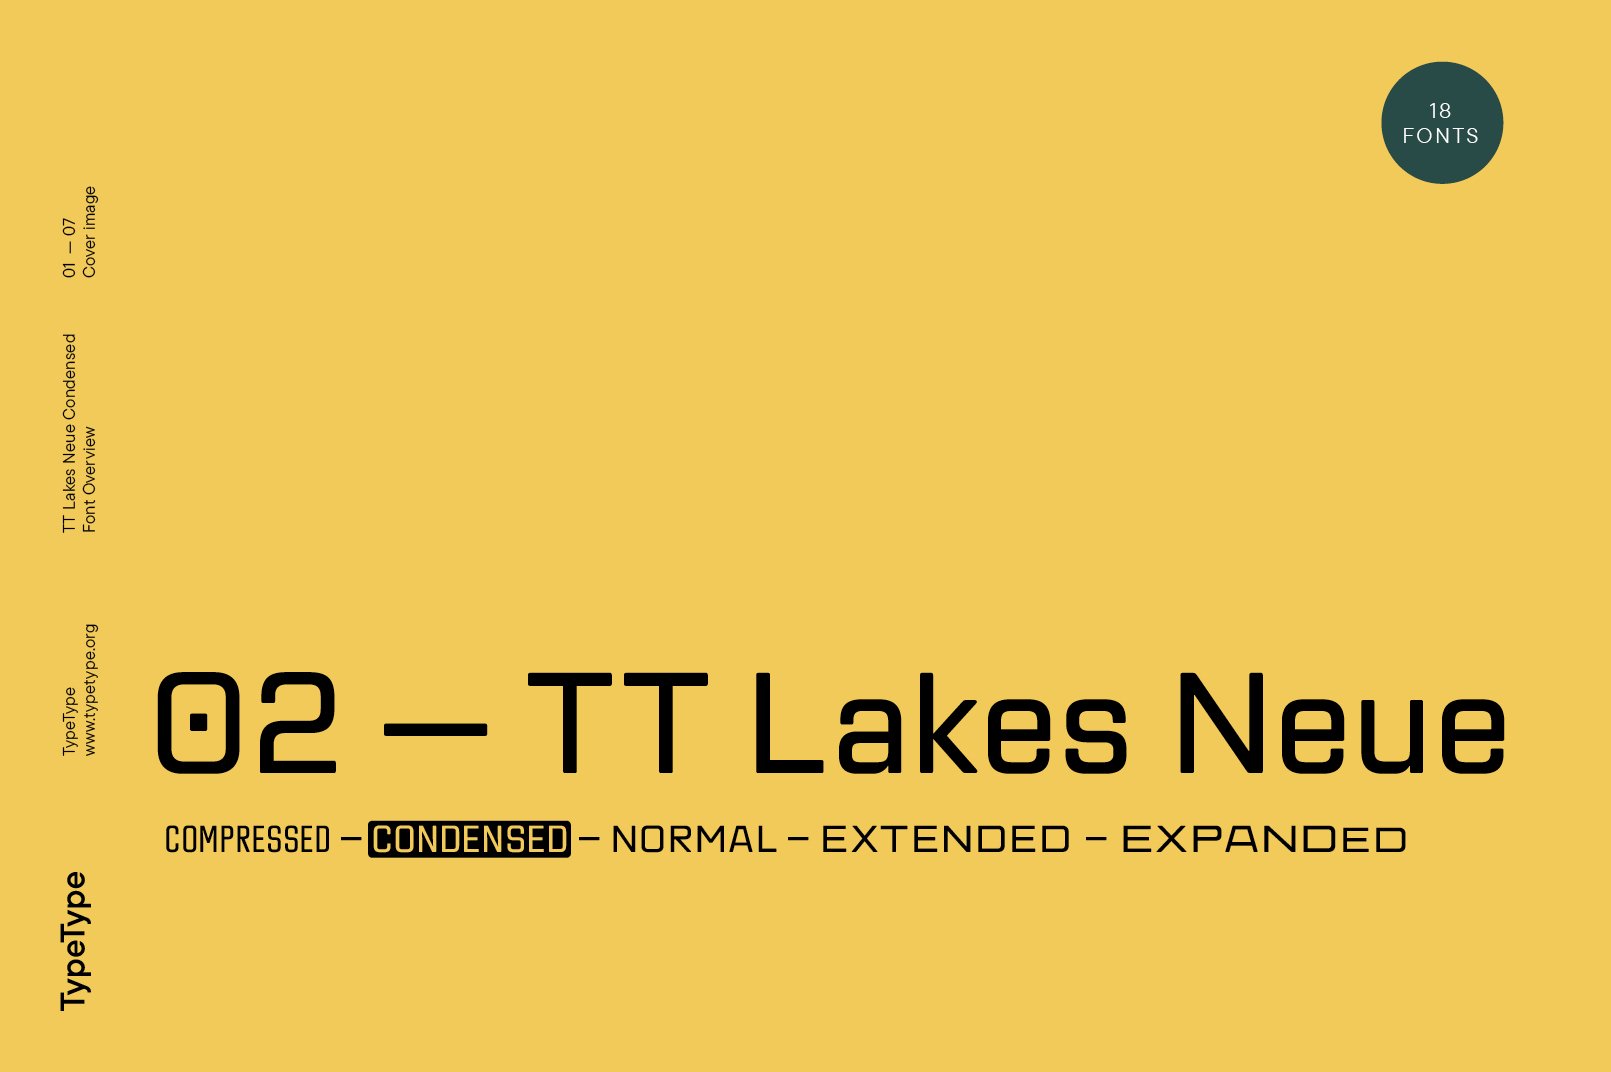 TT Lakes Neue Condensed: 60% off! cover image.